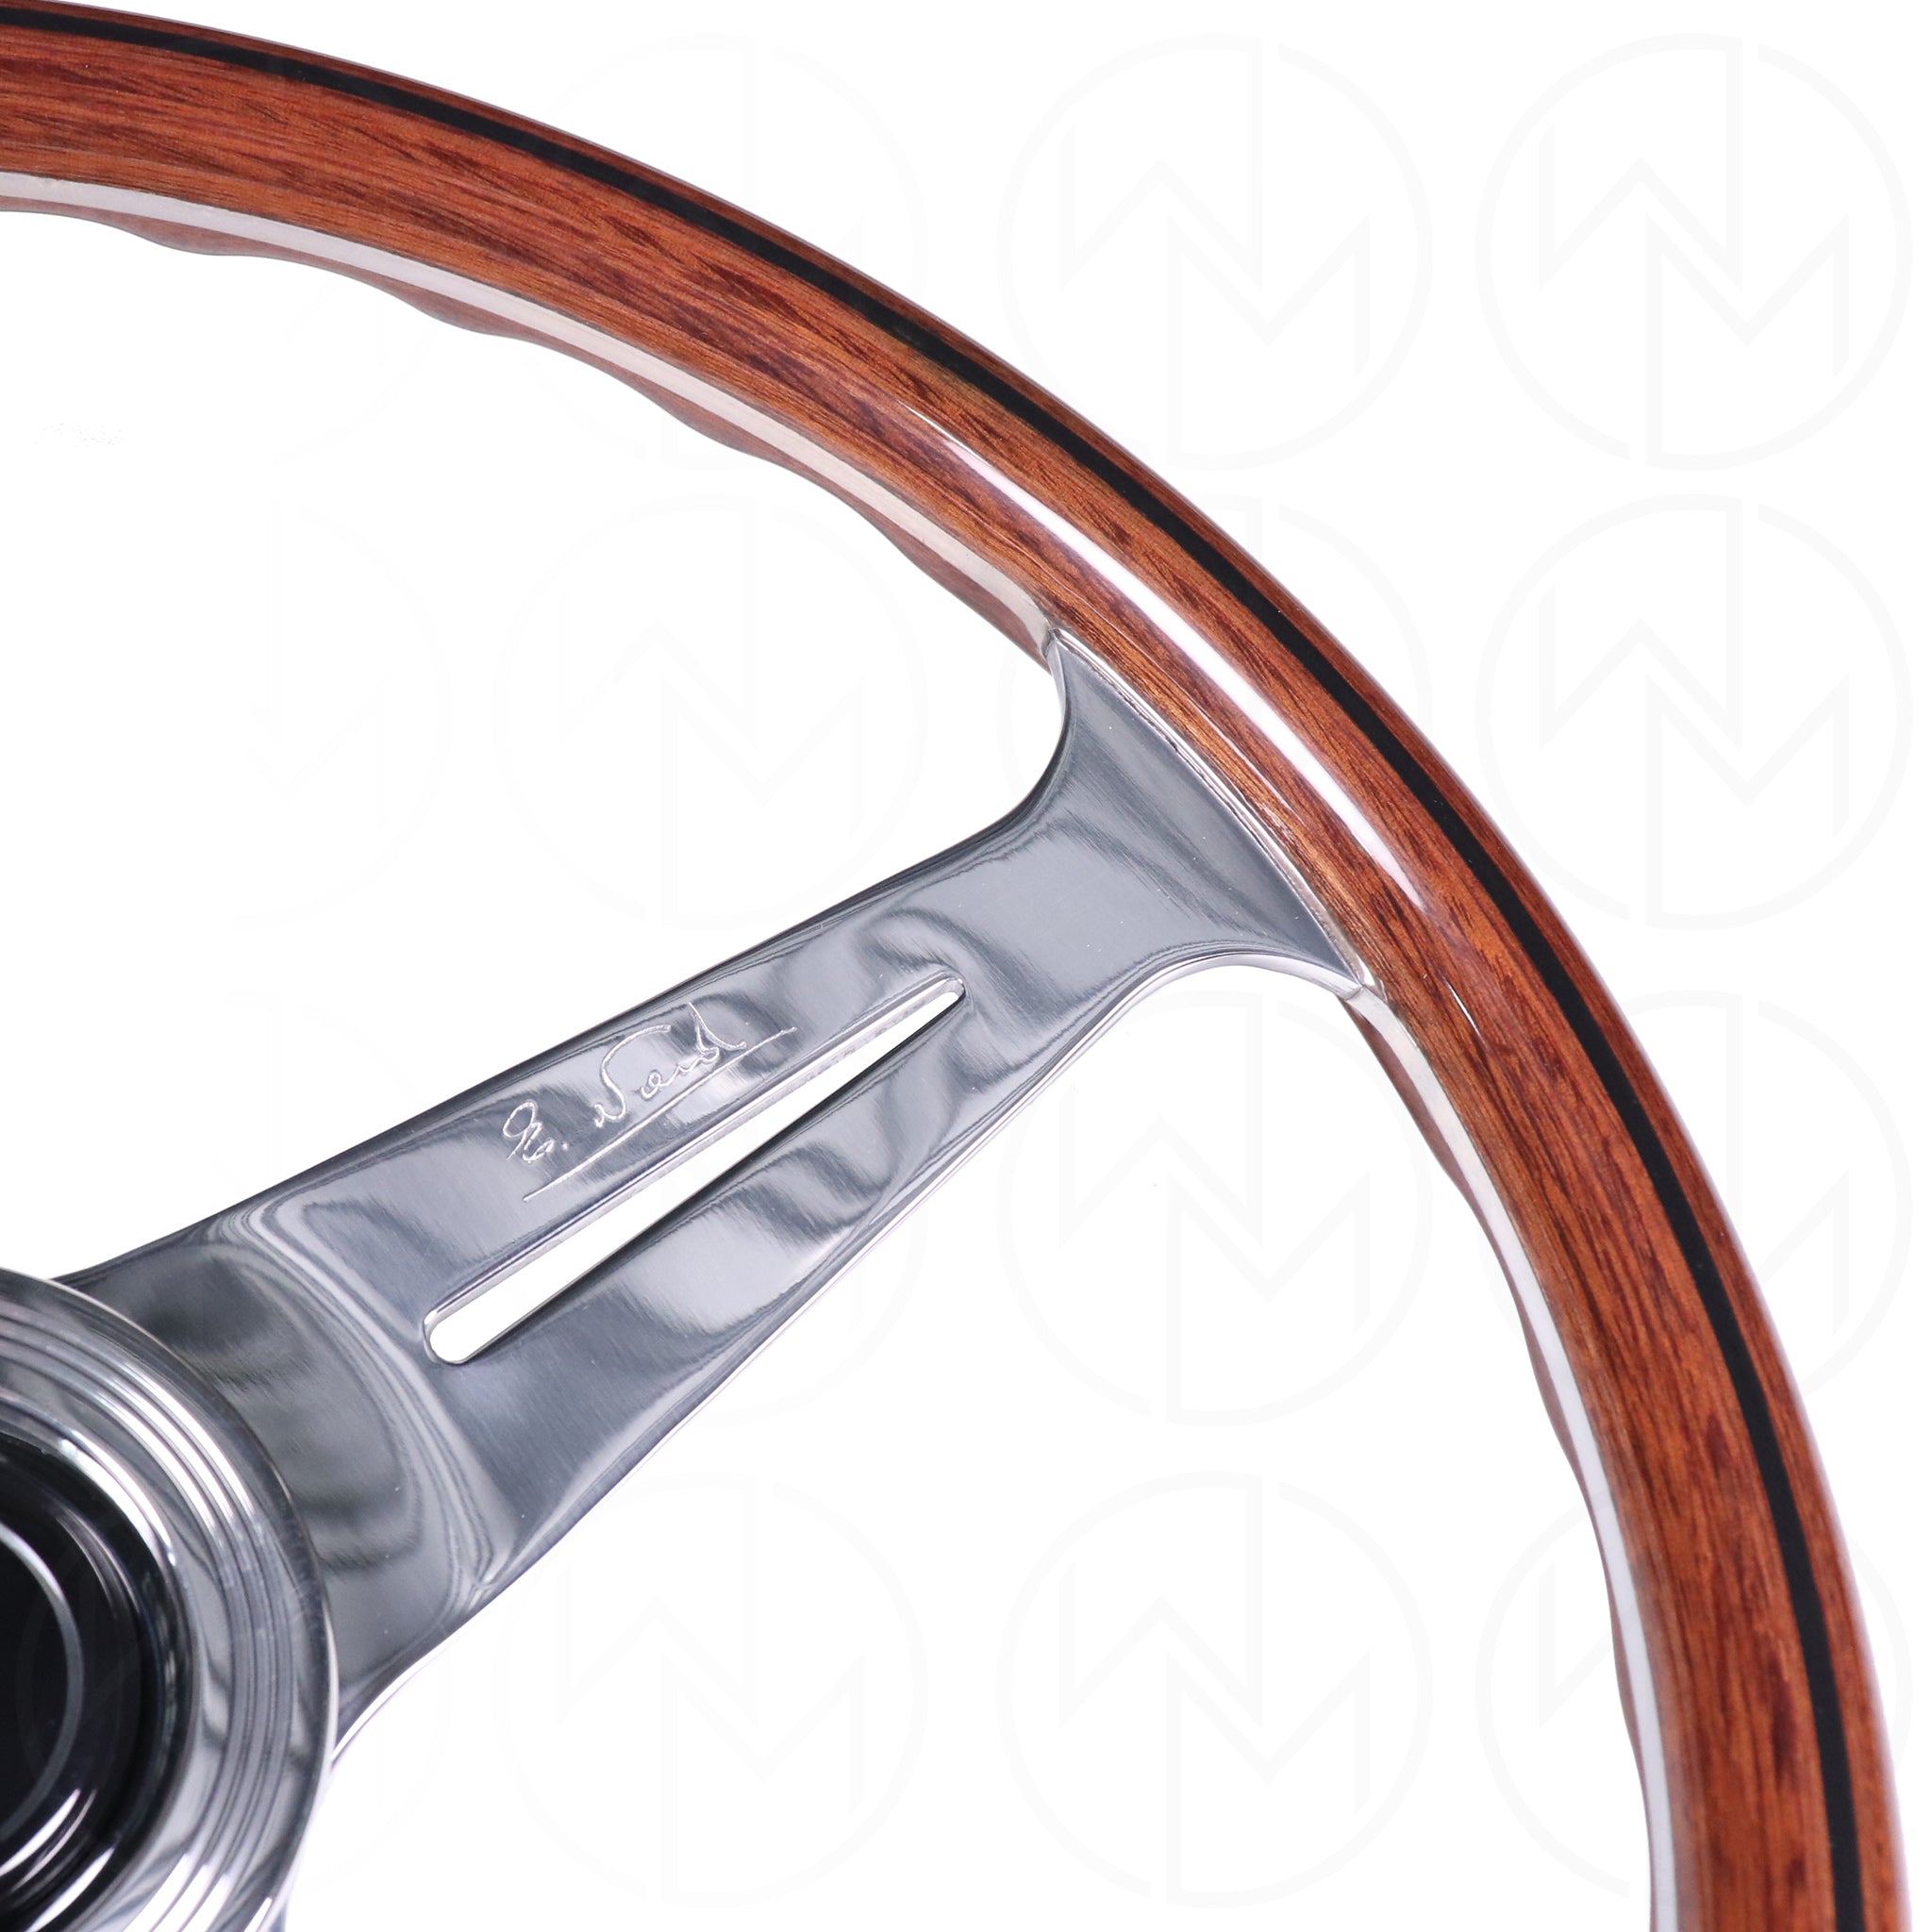 Nardi Classic Wood Steering Wheel - 360mm Polished Spokes